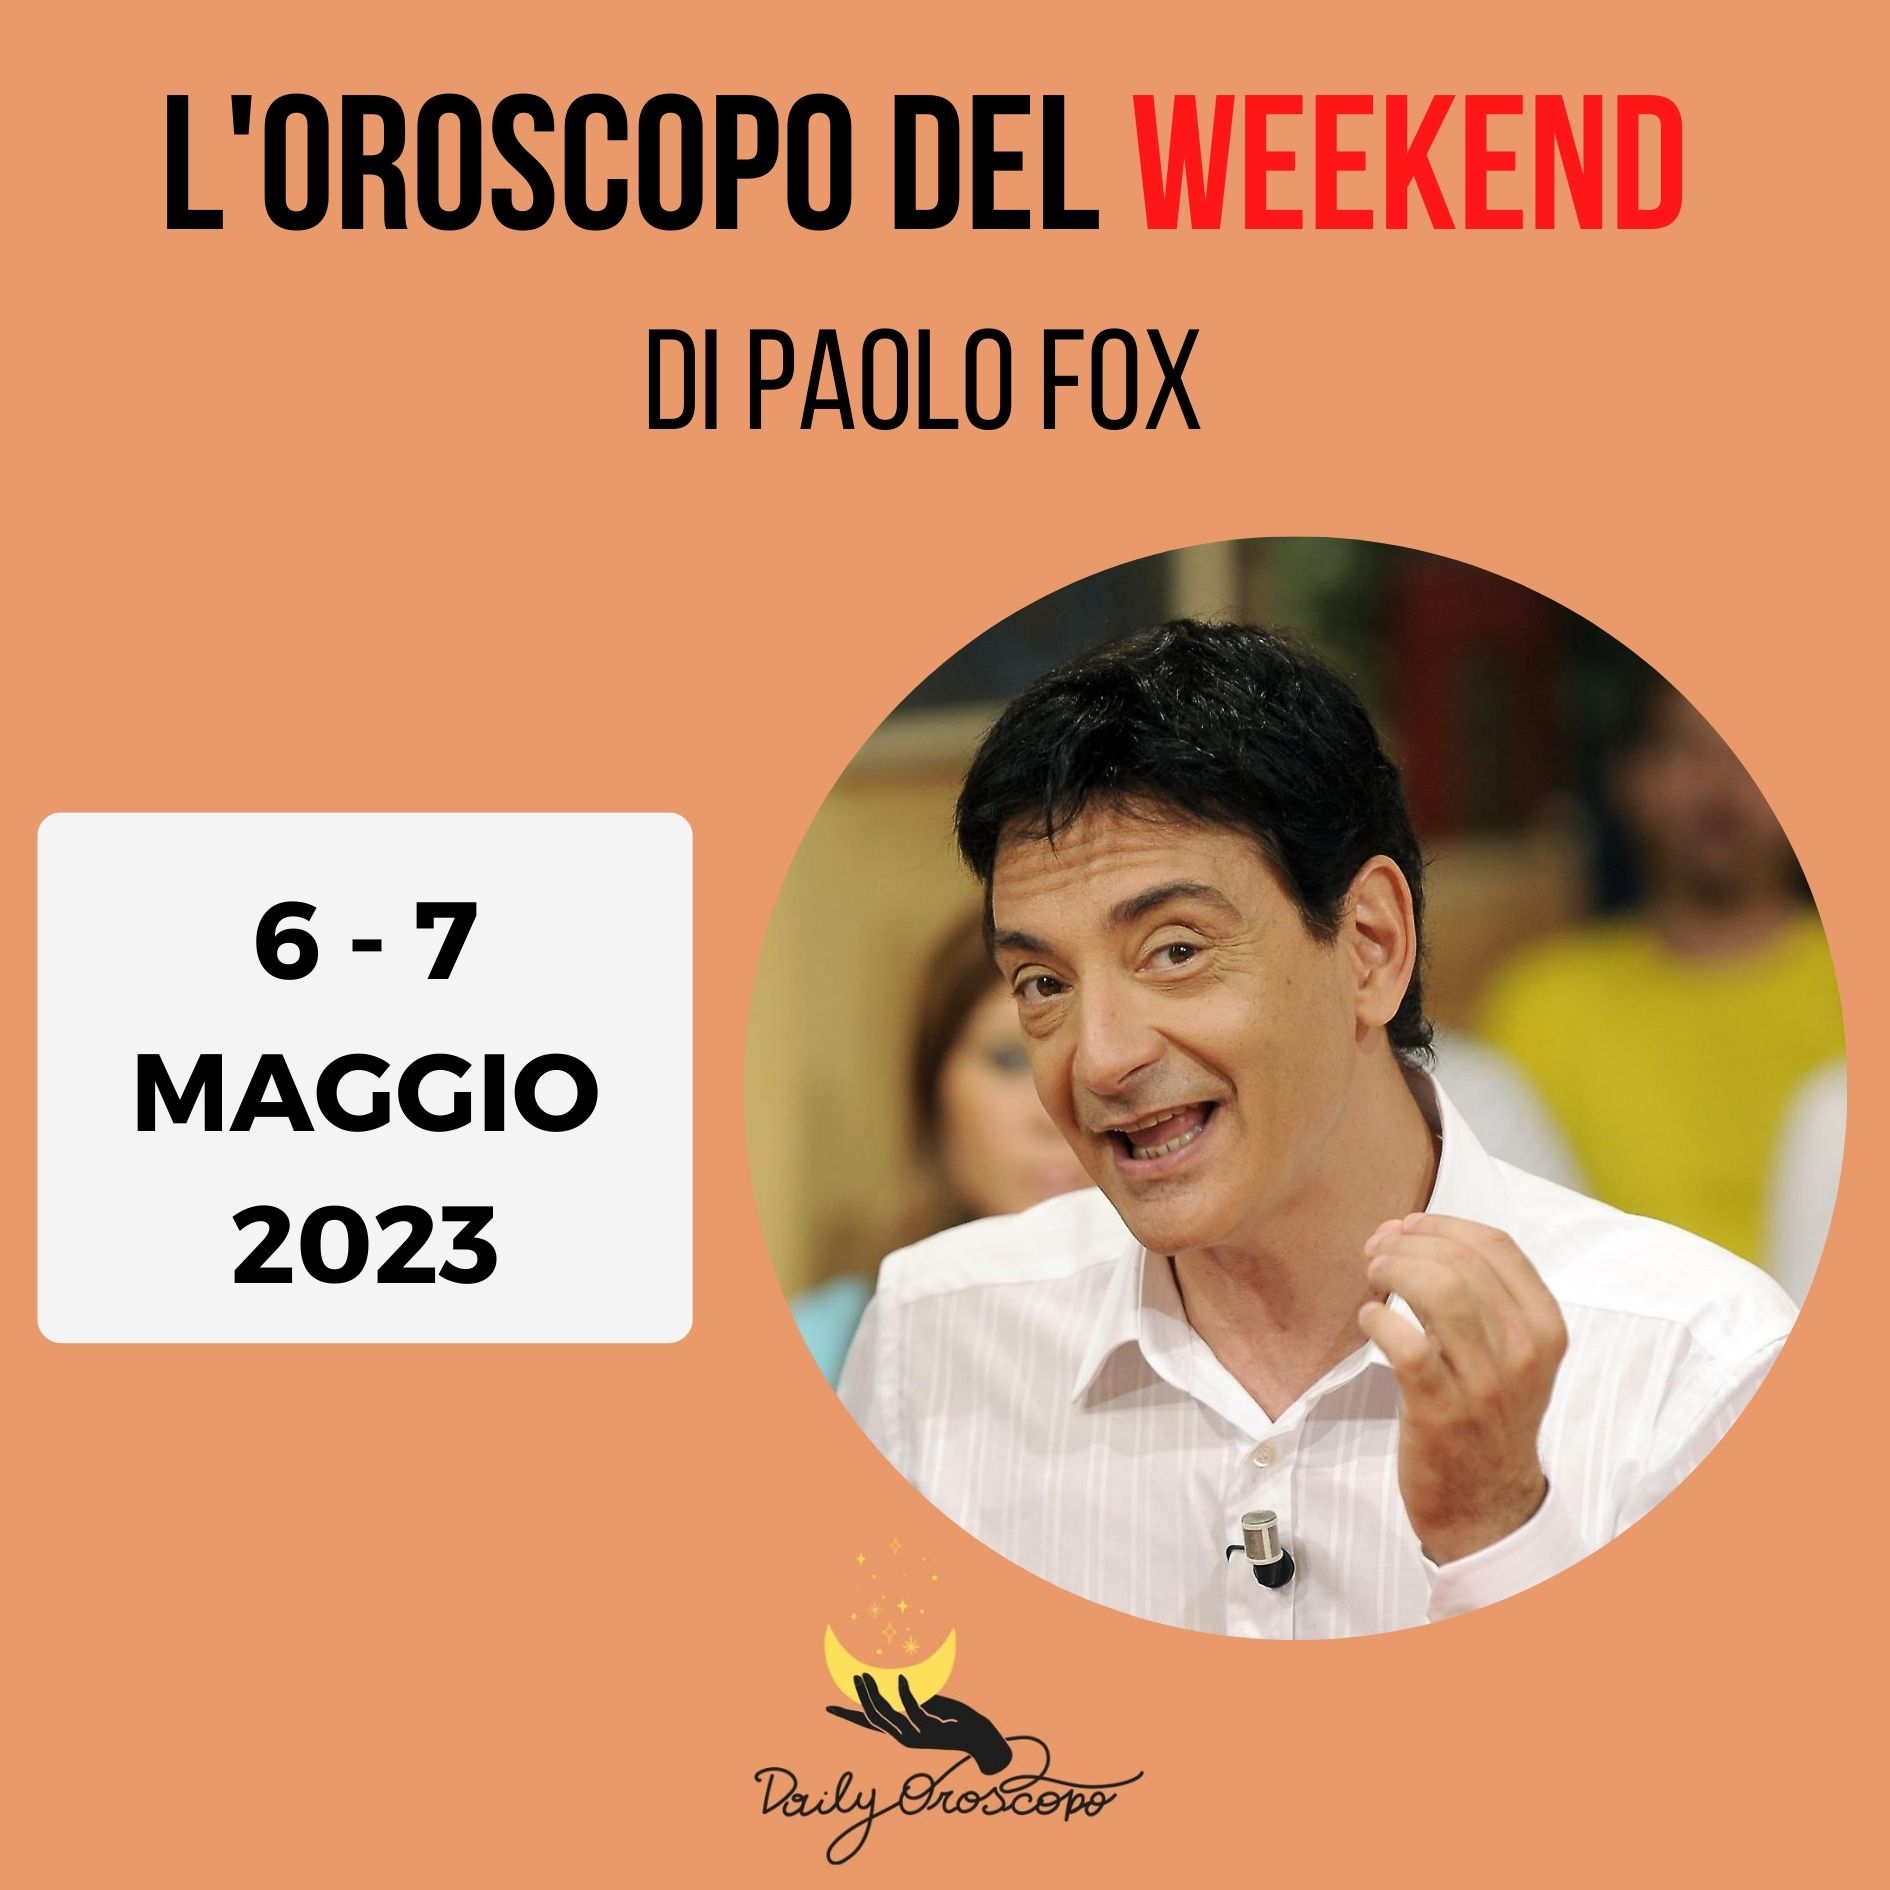 Oroscopo weekend Paolo Fox 6 7 maggio